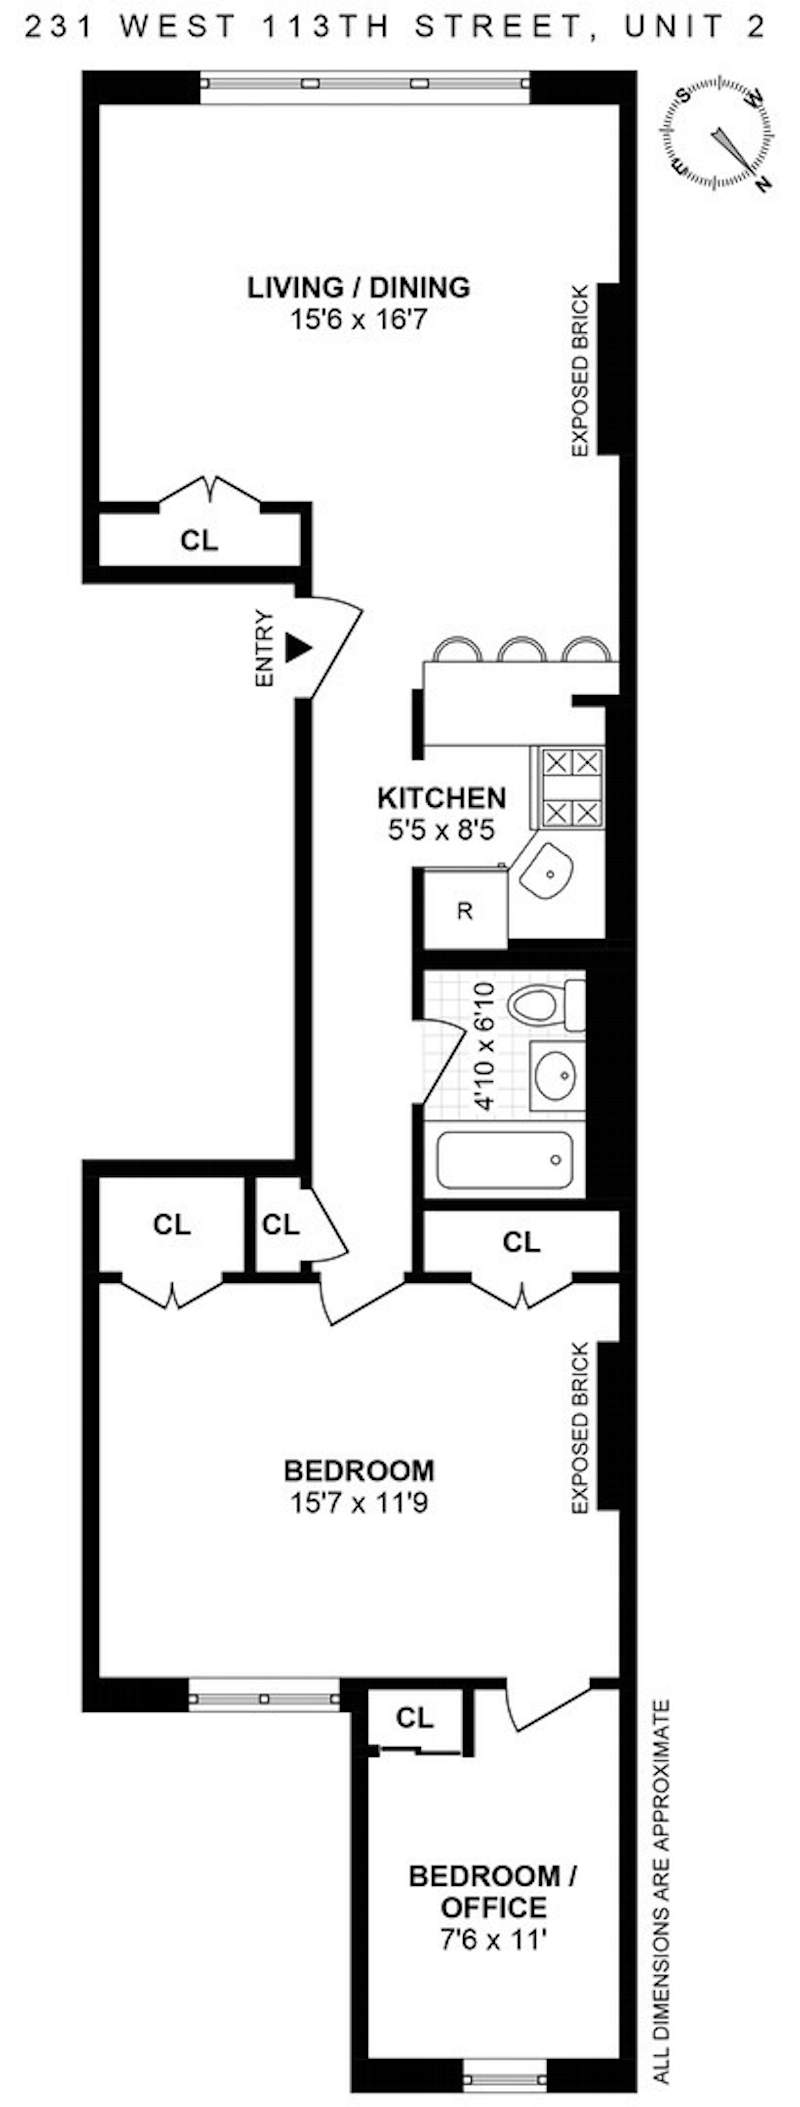 Floorplan for 231 West 113th Street, 2